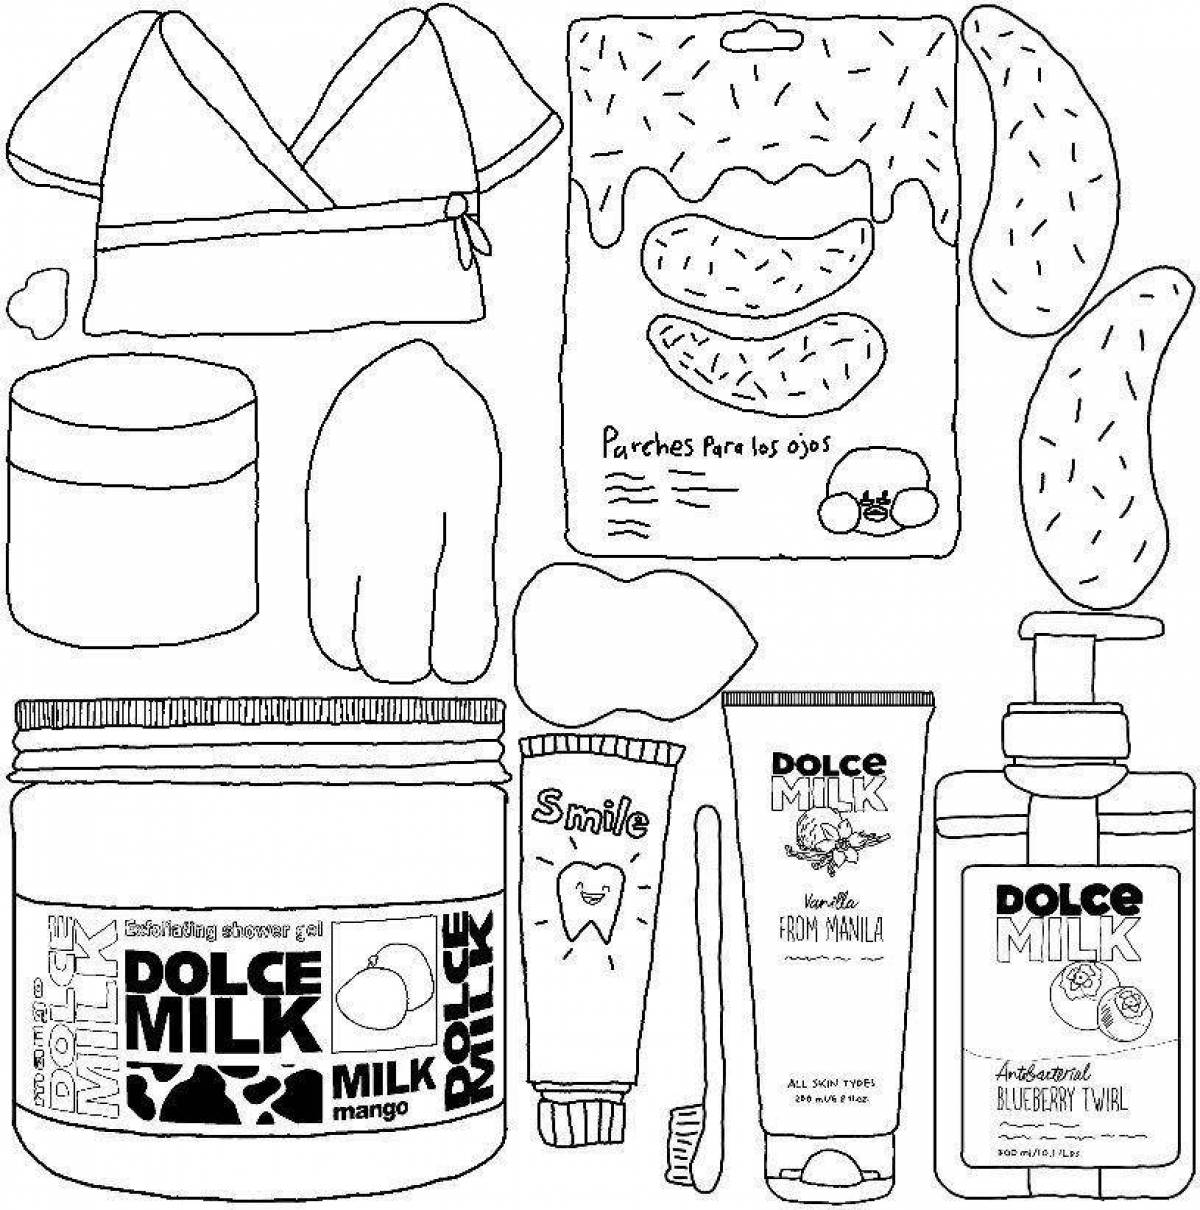 Dolce milk cosmetics #4